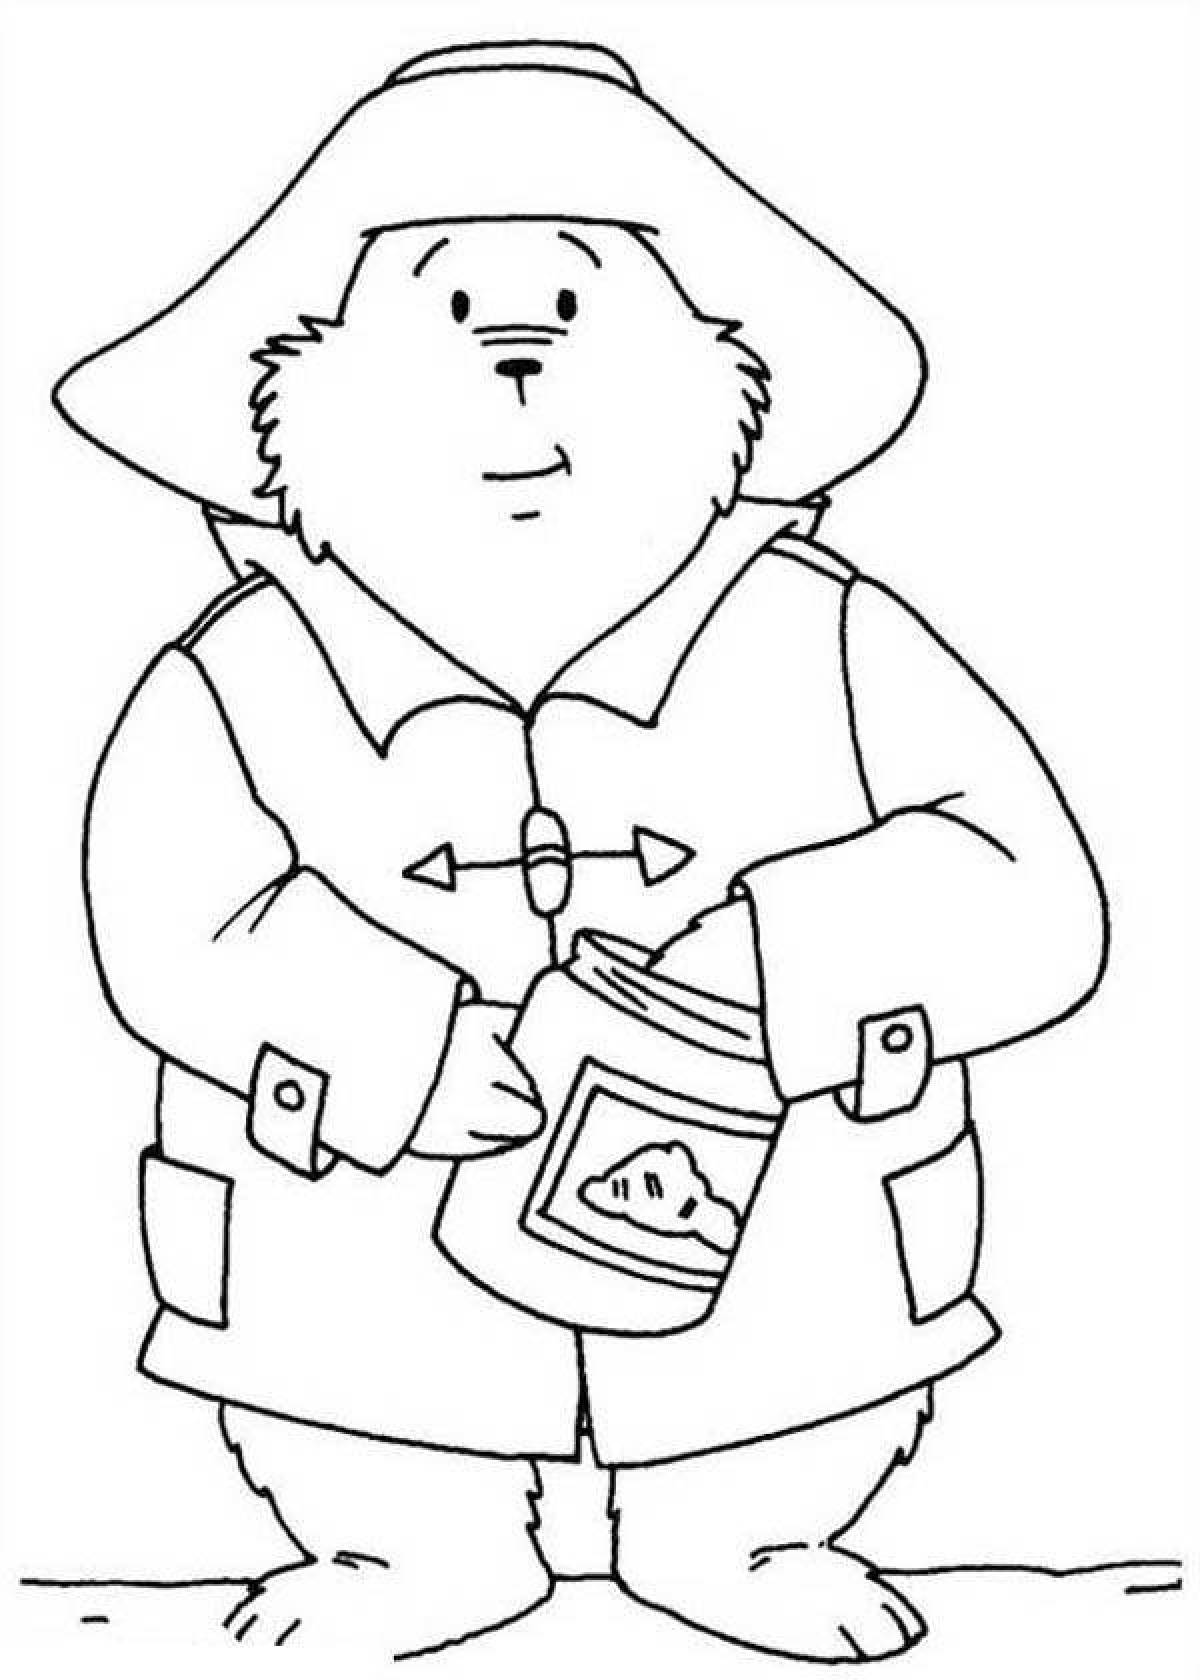 Naughty paddington bear coloring book